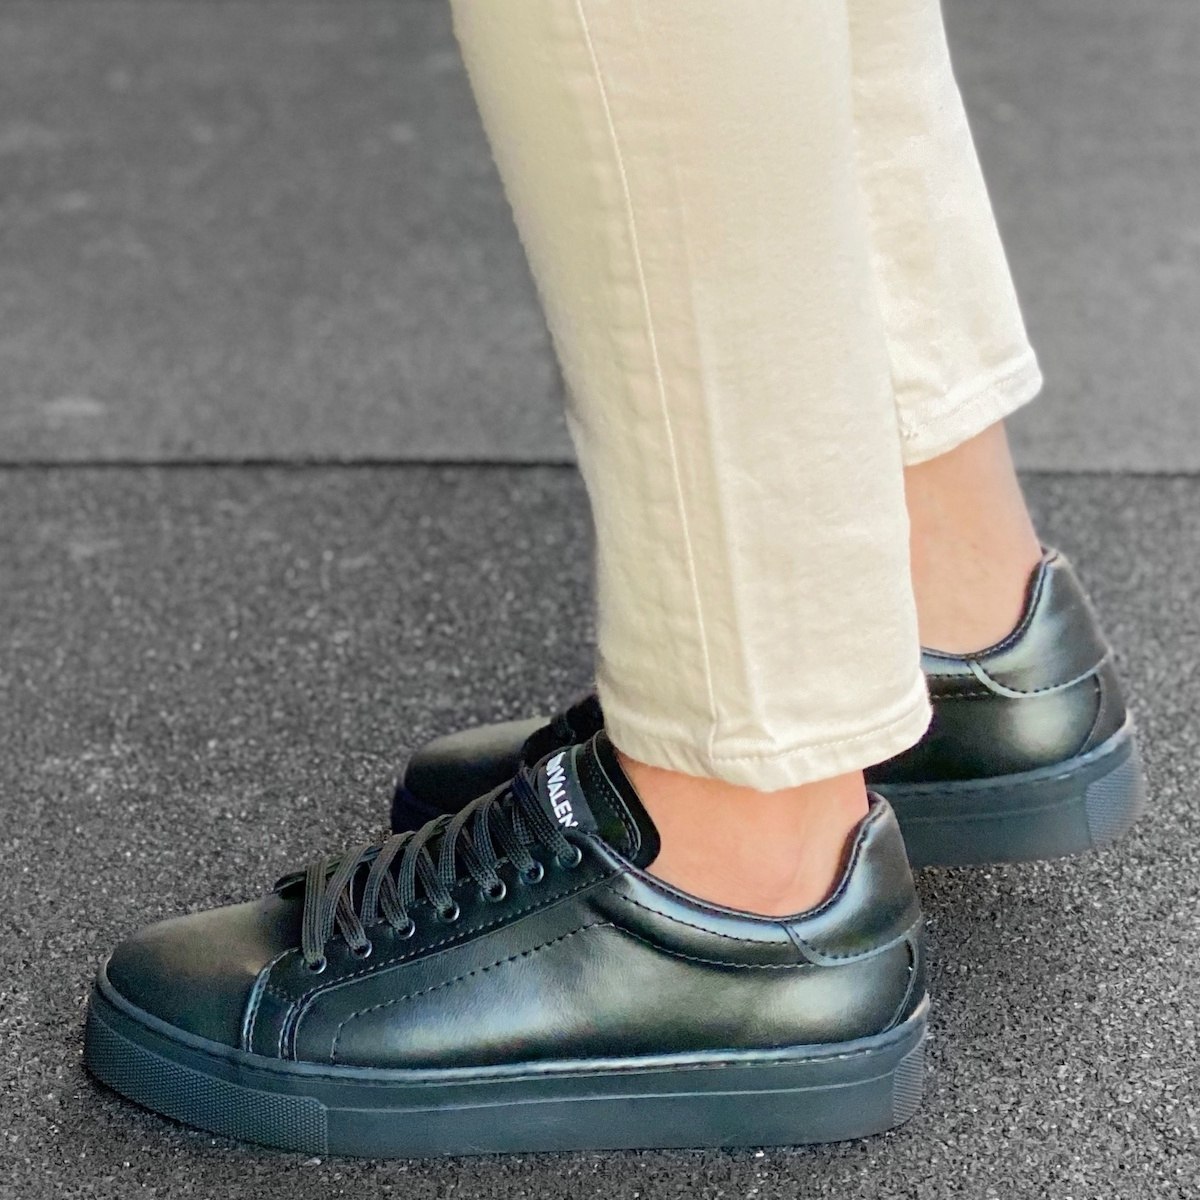 Men’s Low Top Casual Sneakers Shoes Black